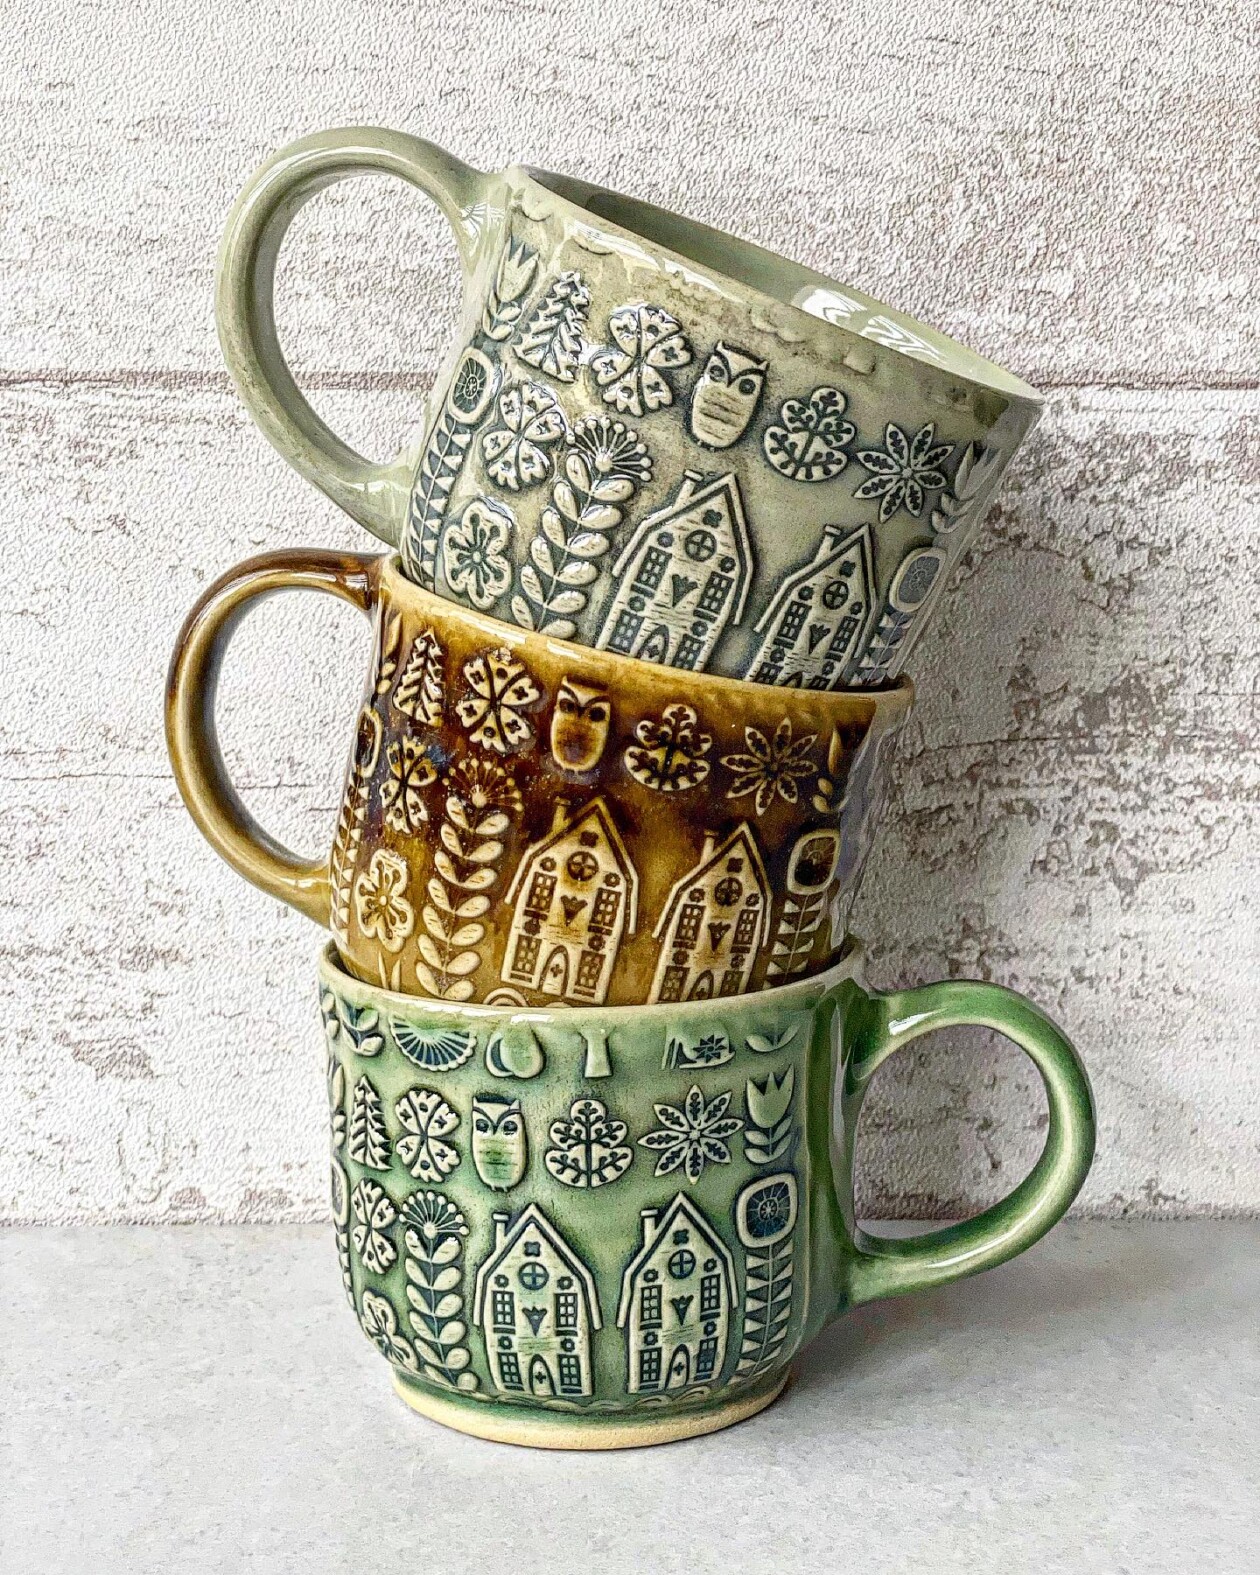 Ceramics With Vintage Motifs By Joanna Dylowska (1)